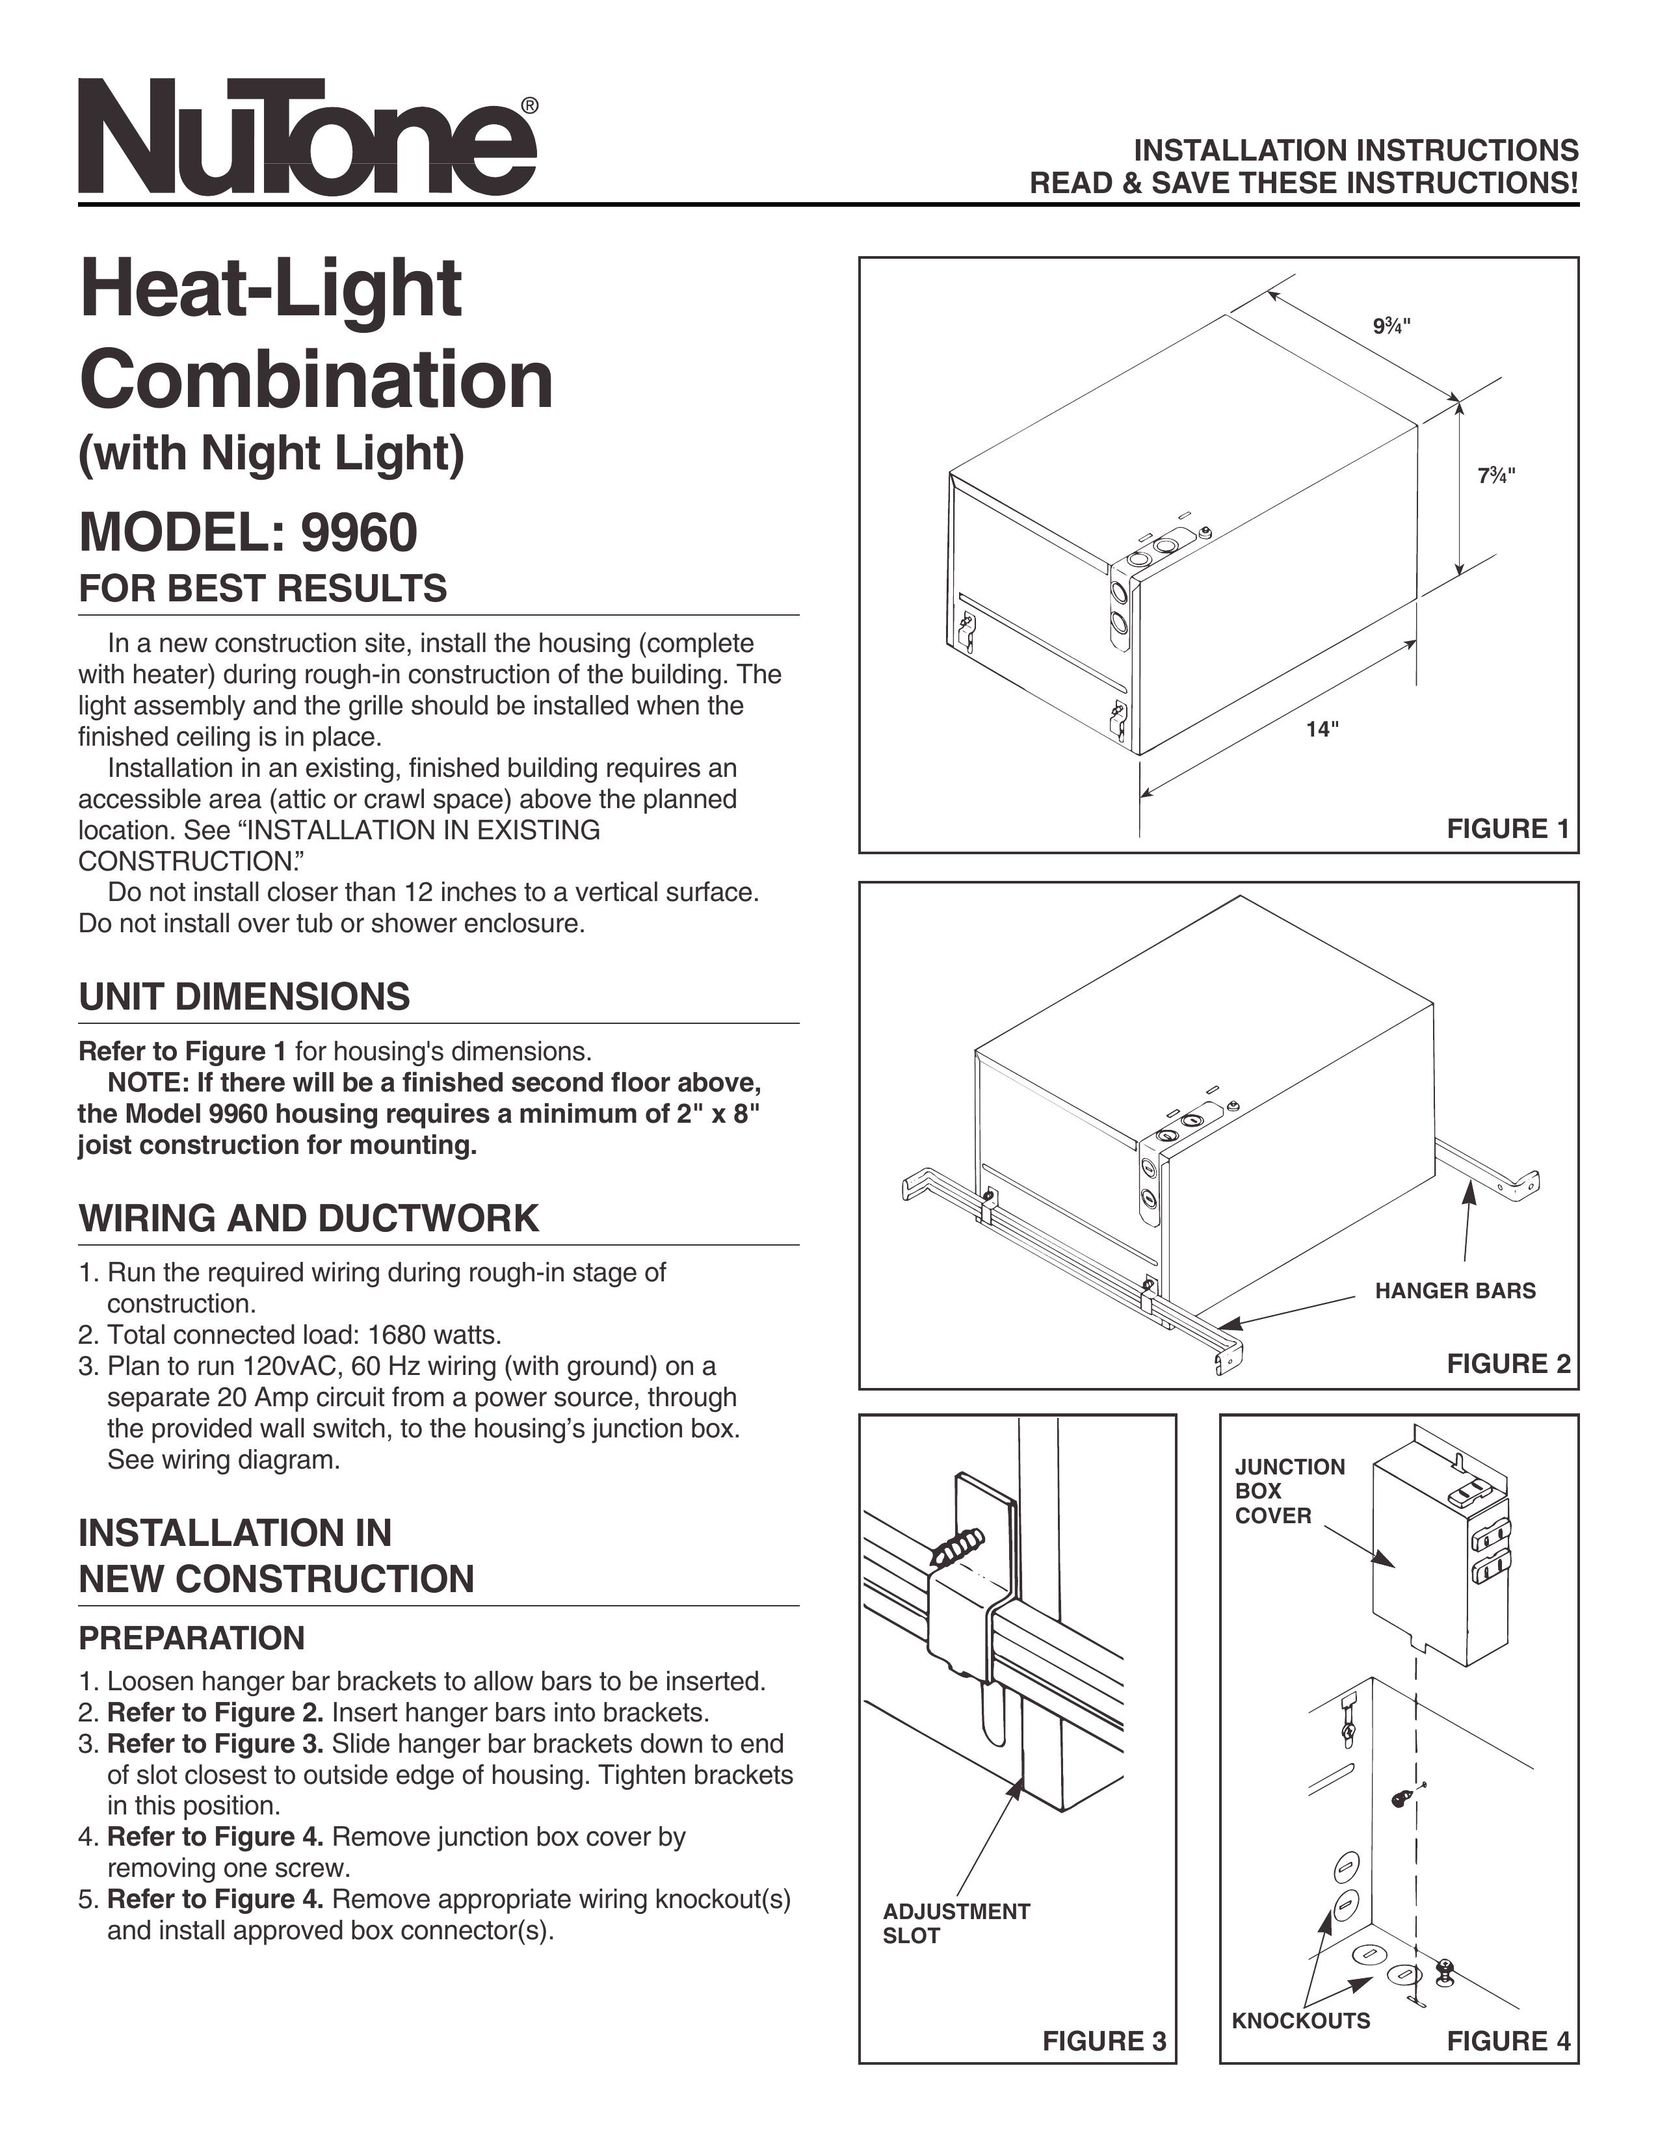 NuTone 9960 Heat Pump User Manual